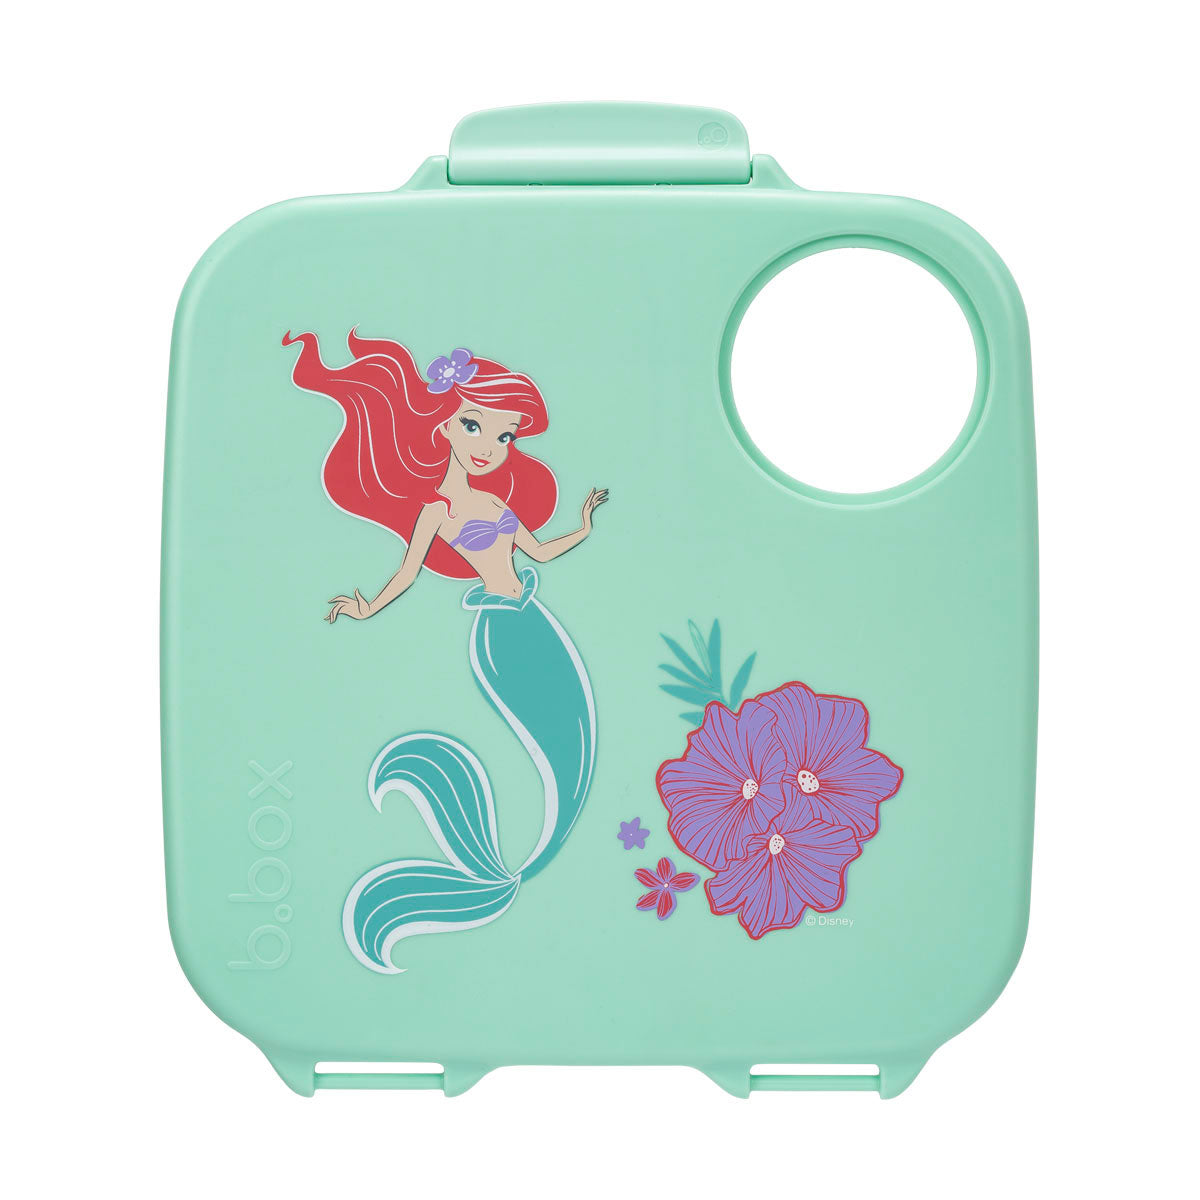 b.box Lunchbox - Disney The Little Mermaid